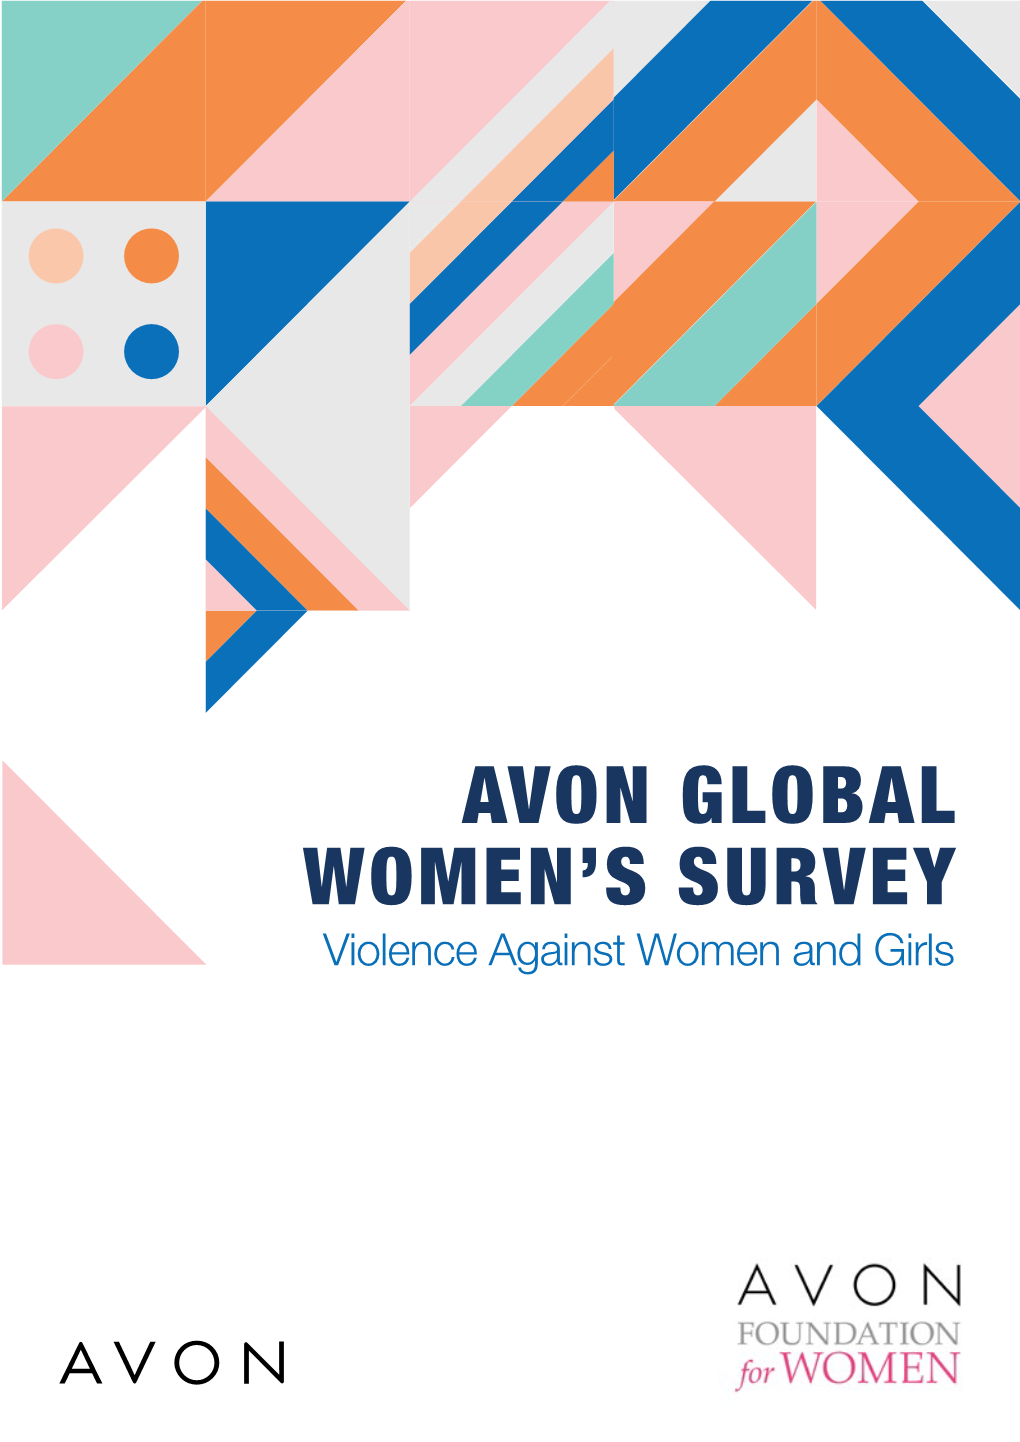 Avon Global Women's Survey